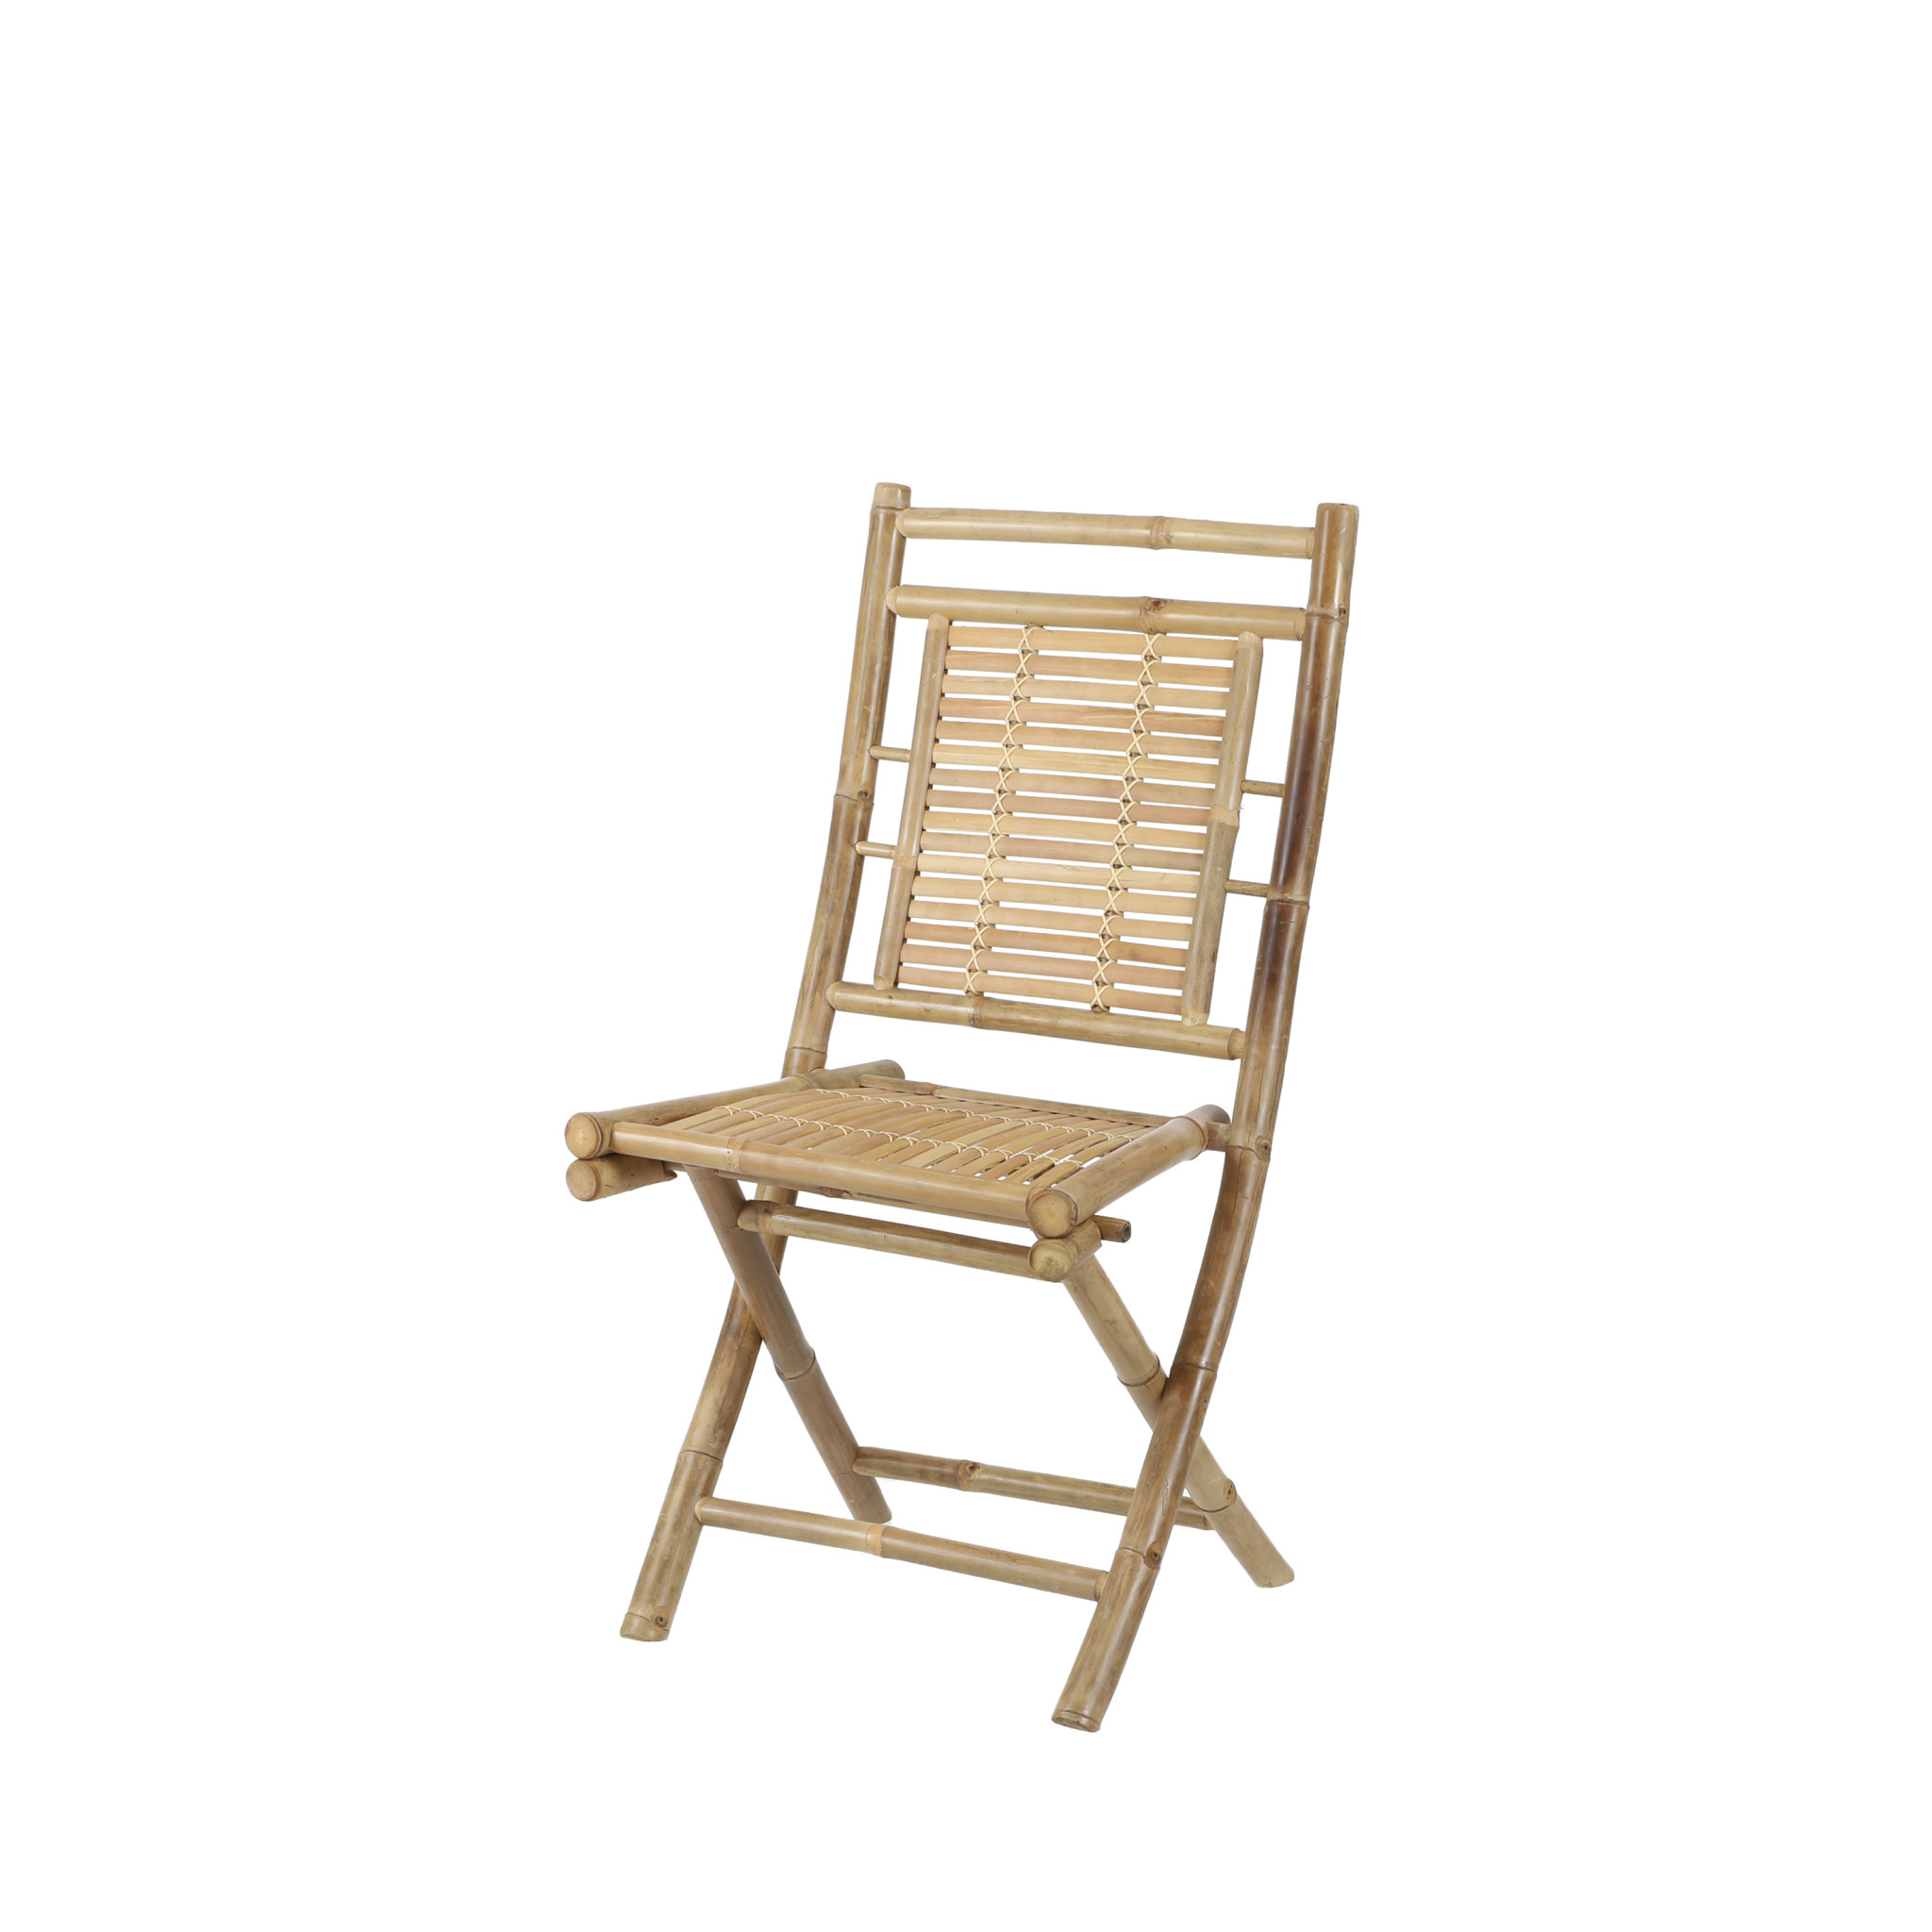 Mica Tropical Chair Bamboo Brown - l45xw55xh90cm